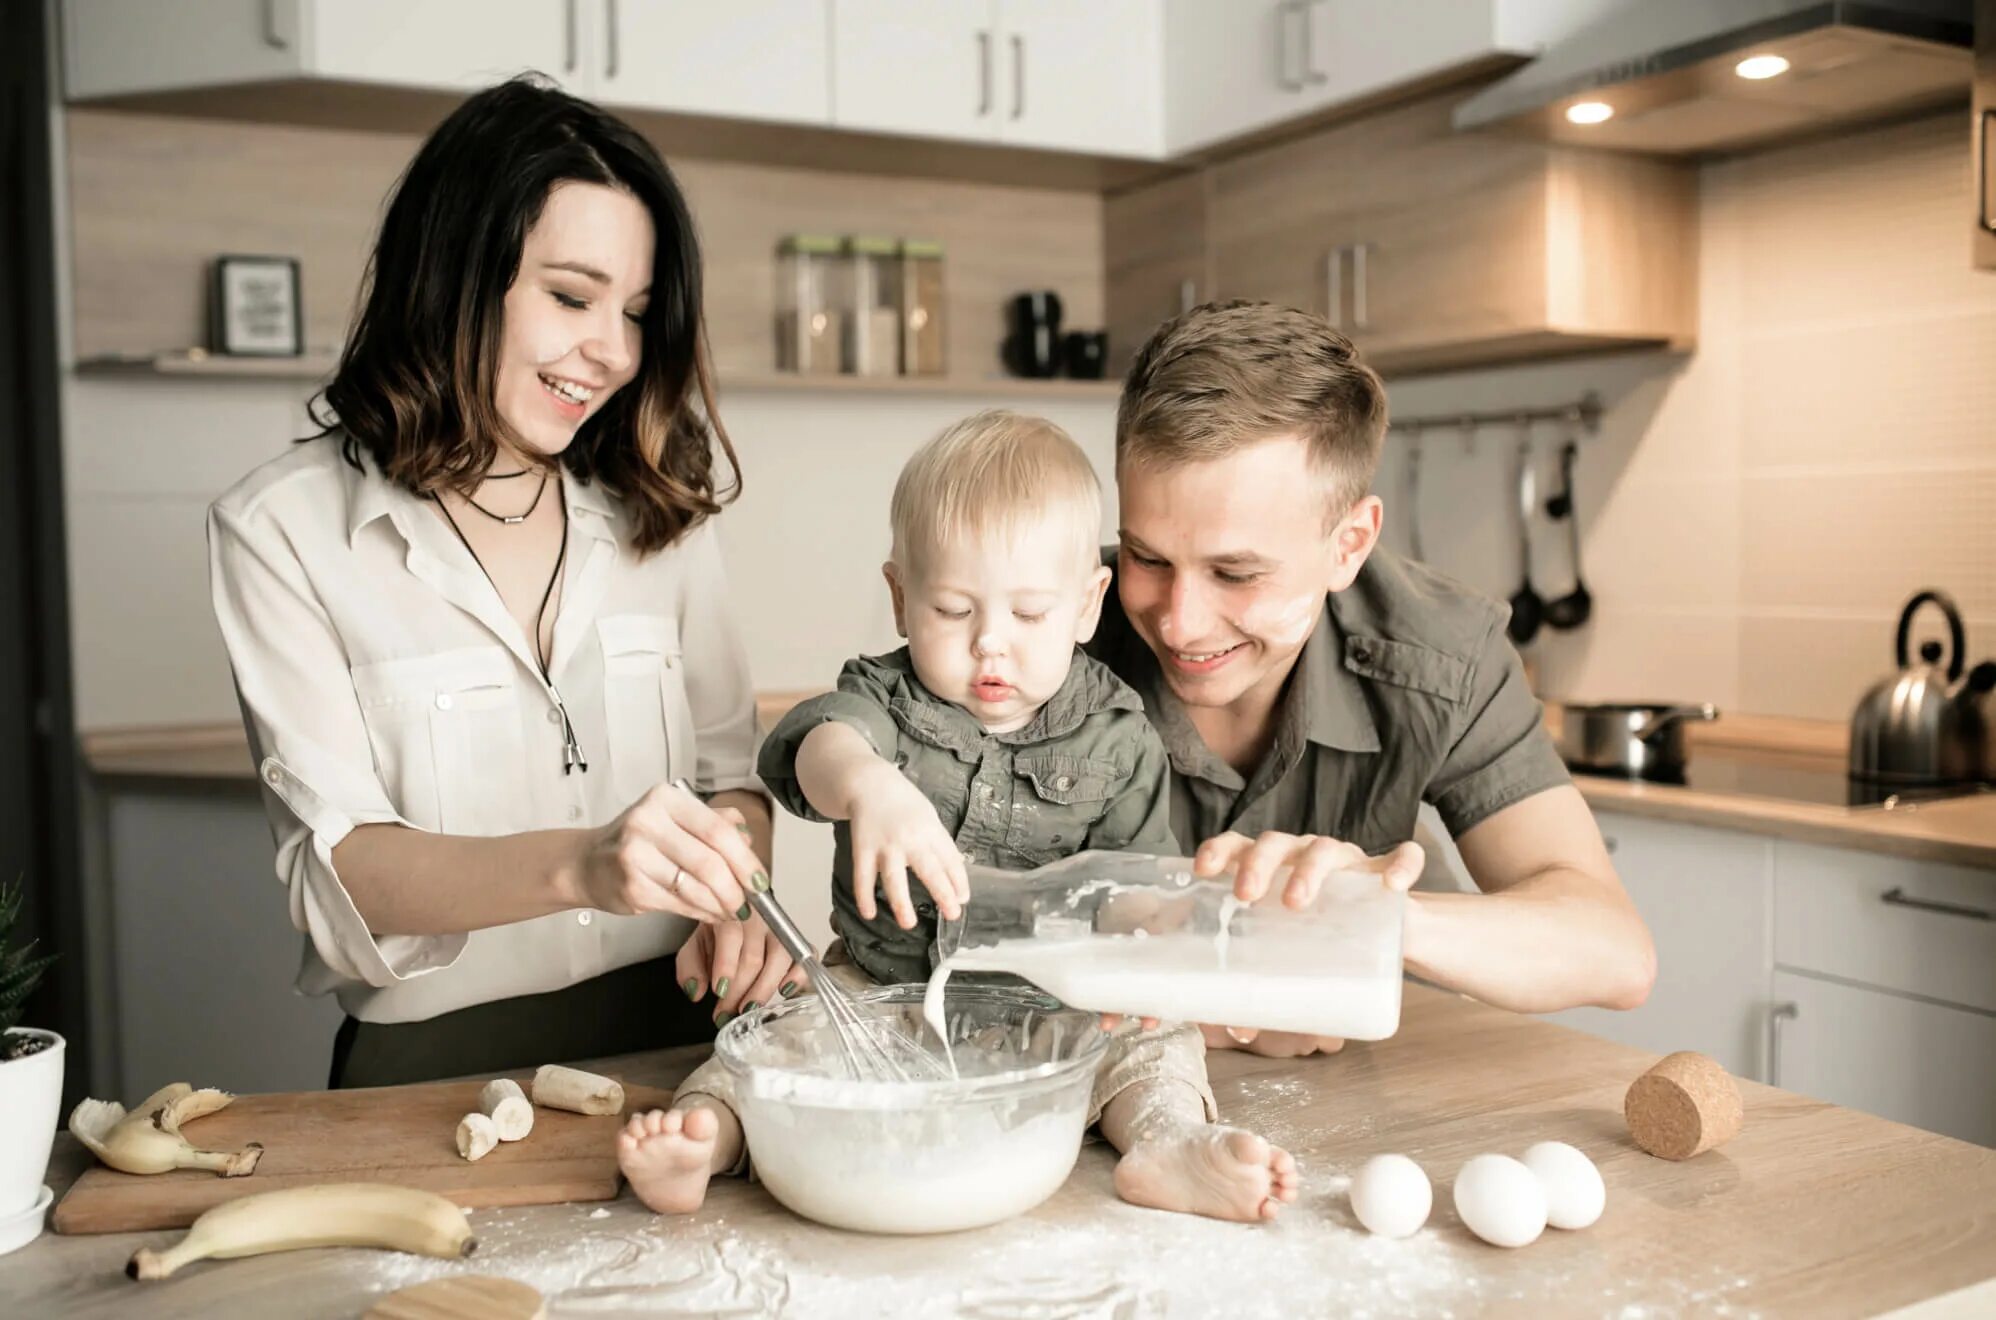 Семья на кухне. Семья с детьми на кухне. Семья на современной кухне. Фотосессия на кухне. Приходит сын на кухню